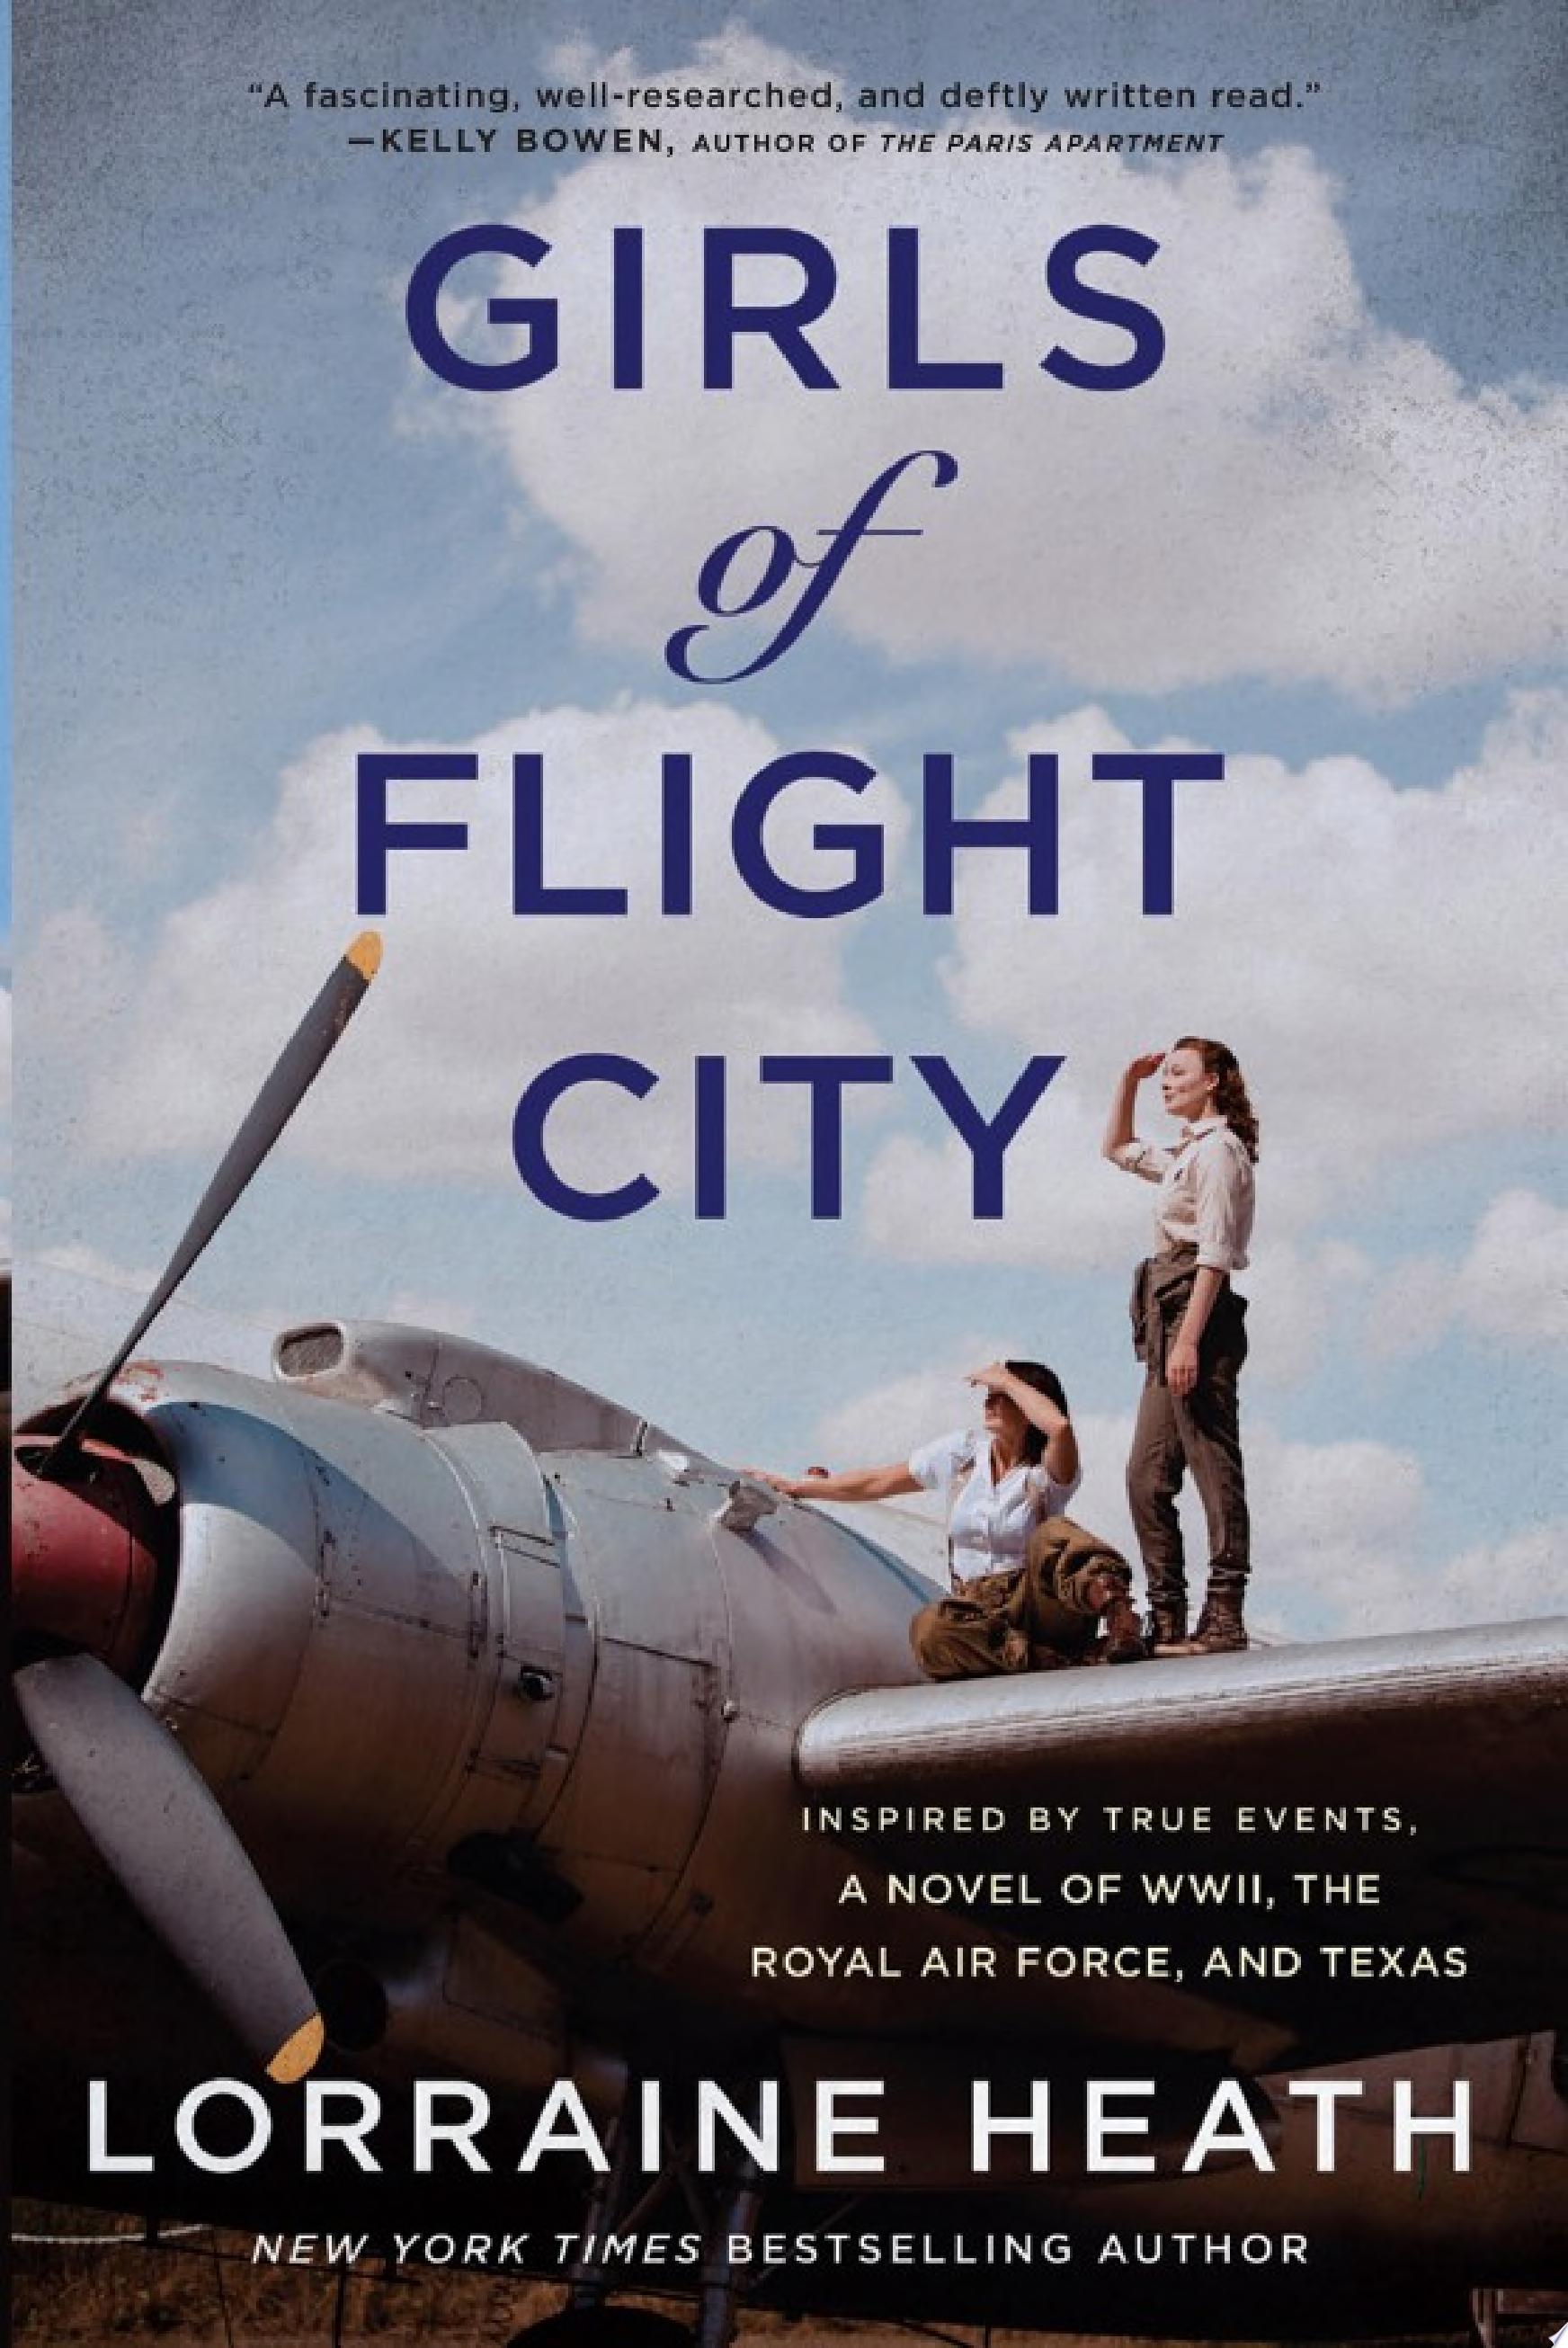 Image for "Girls of Flight City"